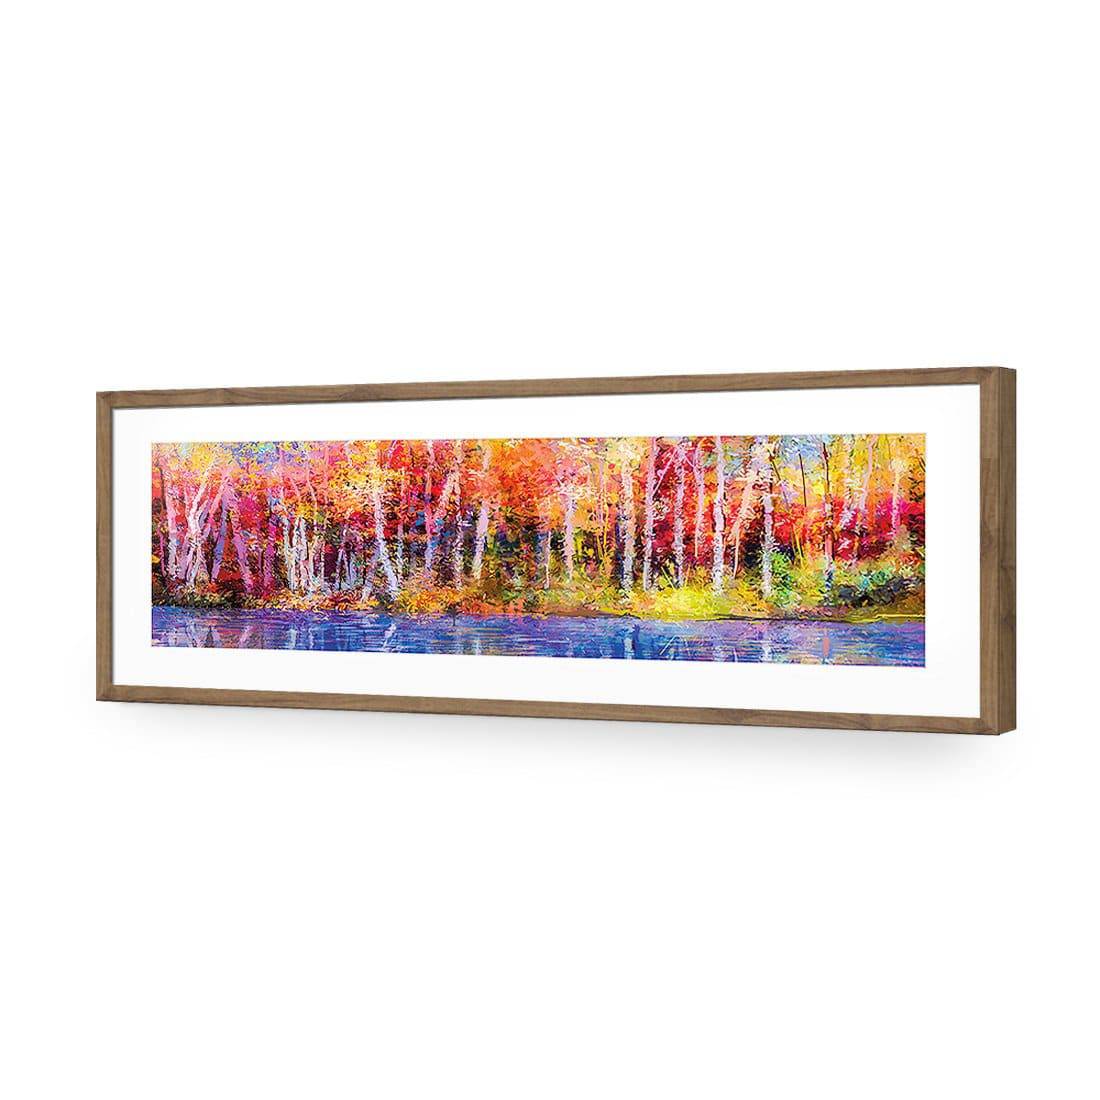 Rainbow Tree Forest, Long-Acrylic-Wall Art Design-With Border-Acrylic - Natural Frame-60x20cm-Wall Art Designs